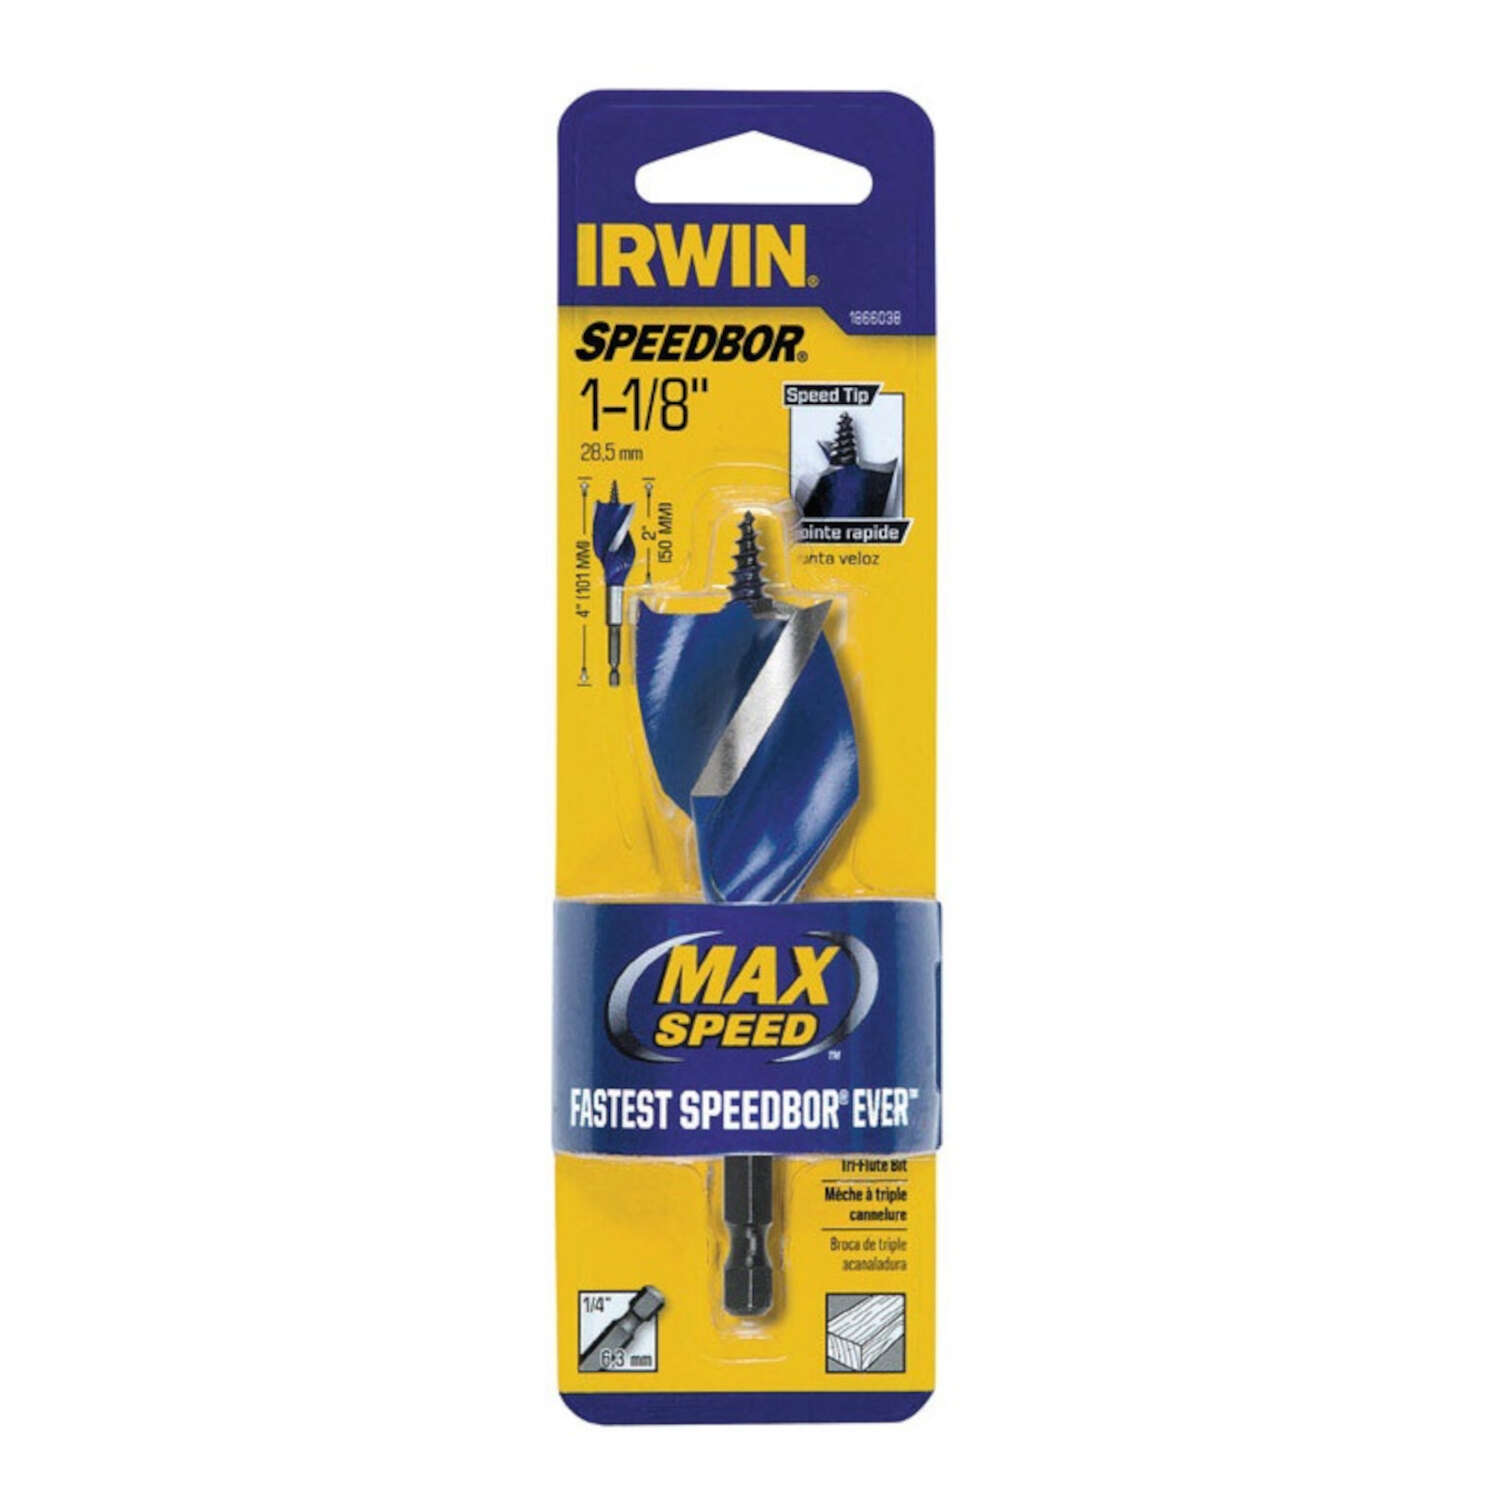 Speedbor 1866038 Irwin Tools Max Wood Drilling Bit 4-Inch by 1 1/8-Inch 